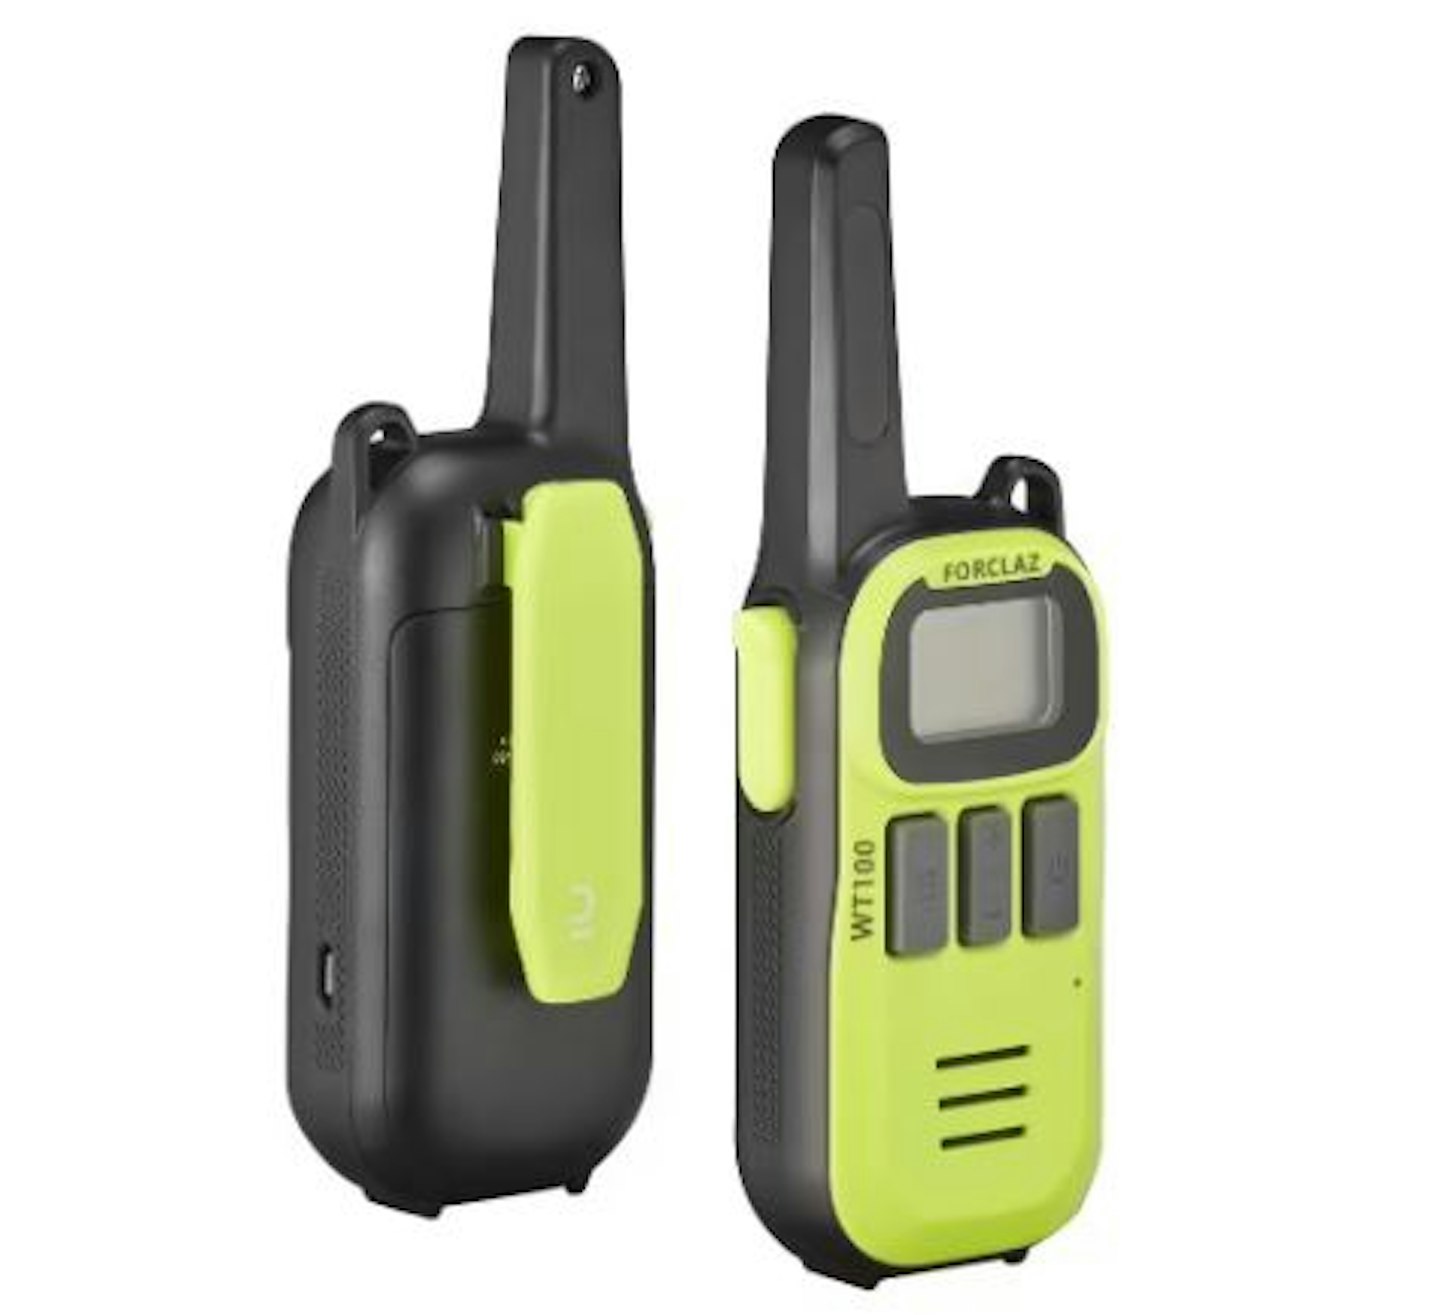 Decathlon Forclaz WT100 walkie talkie review